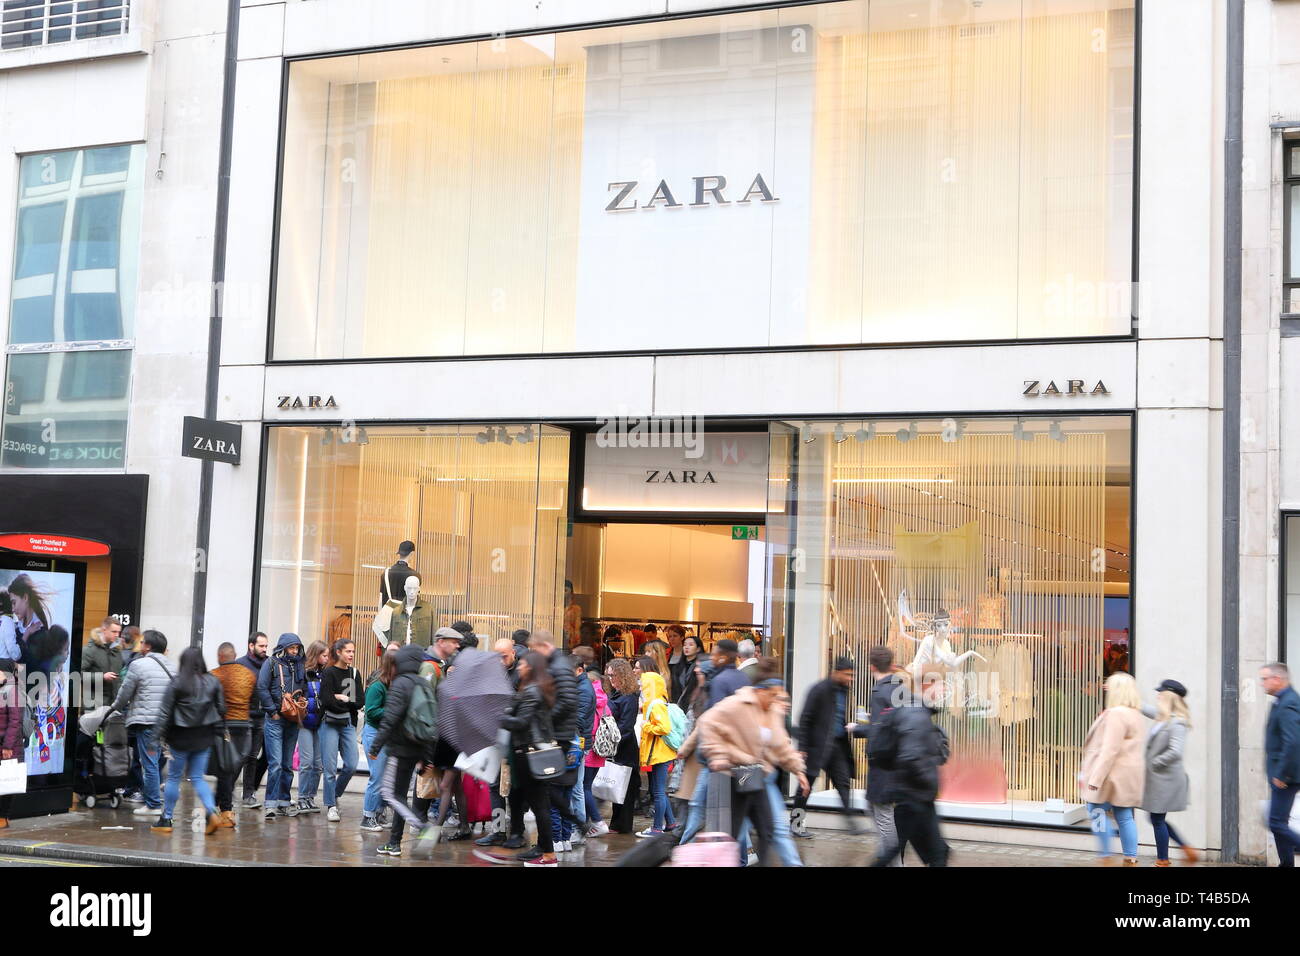 Zara Shop London High Resolution Stock 